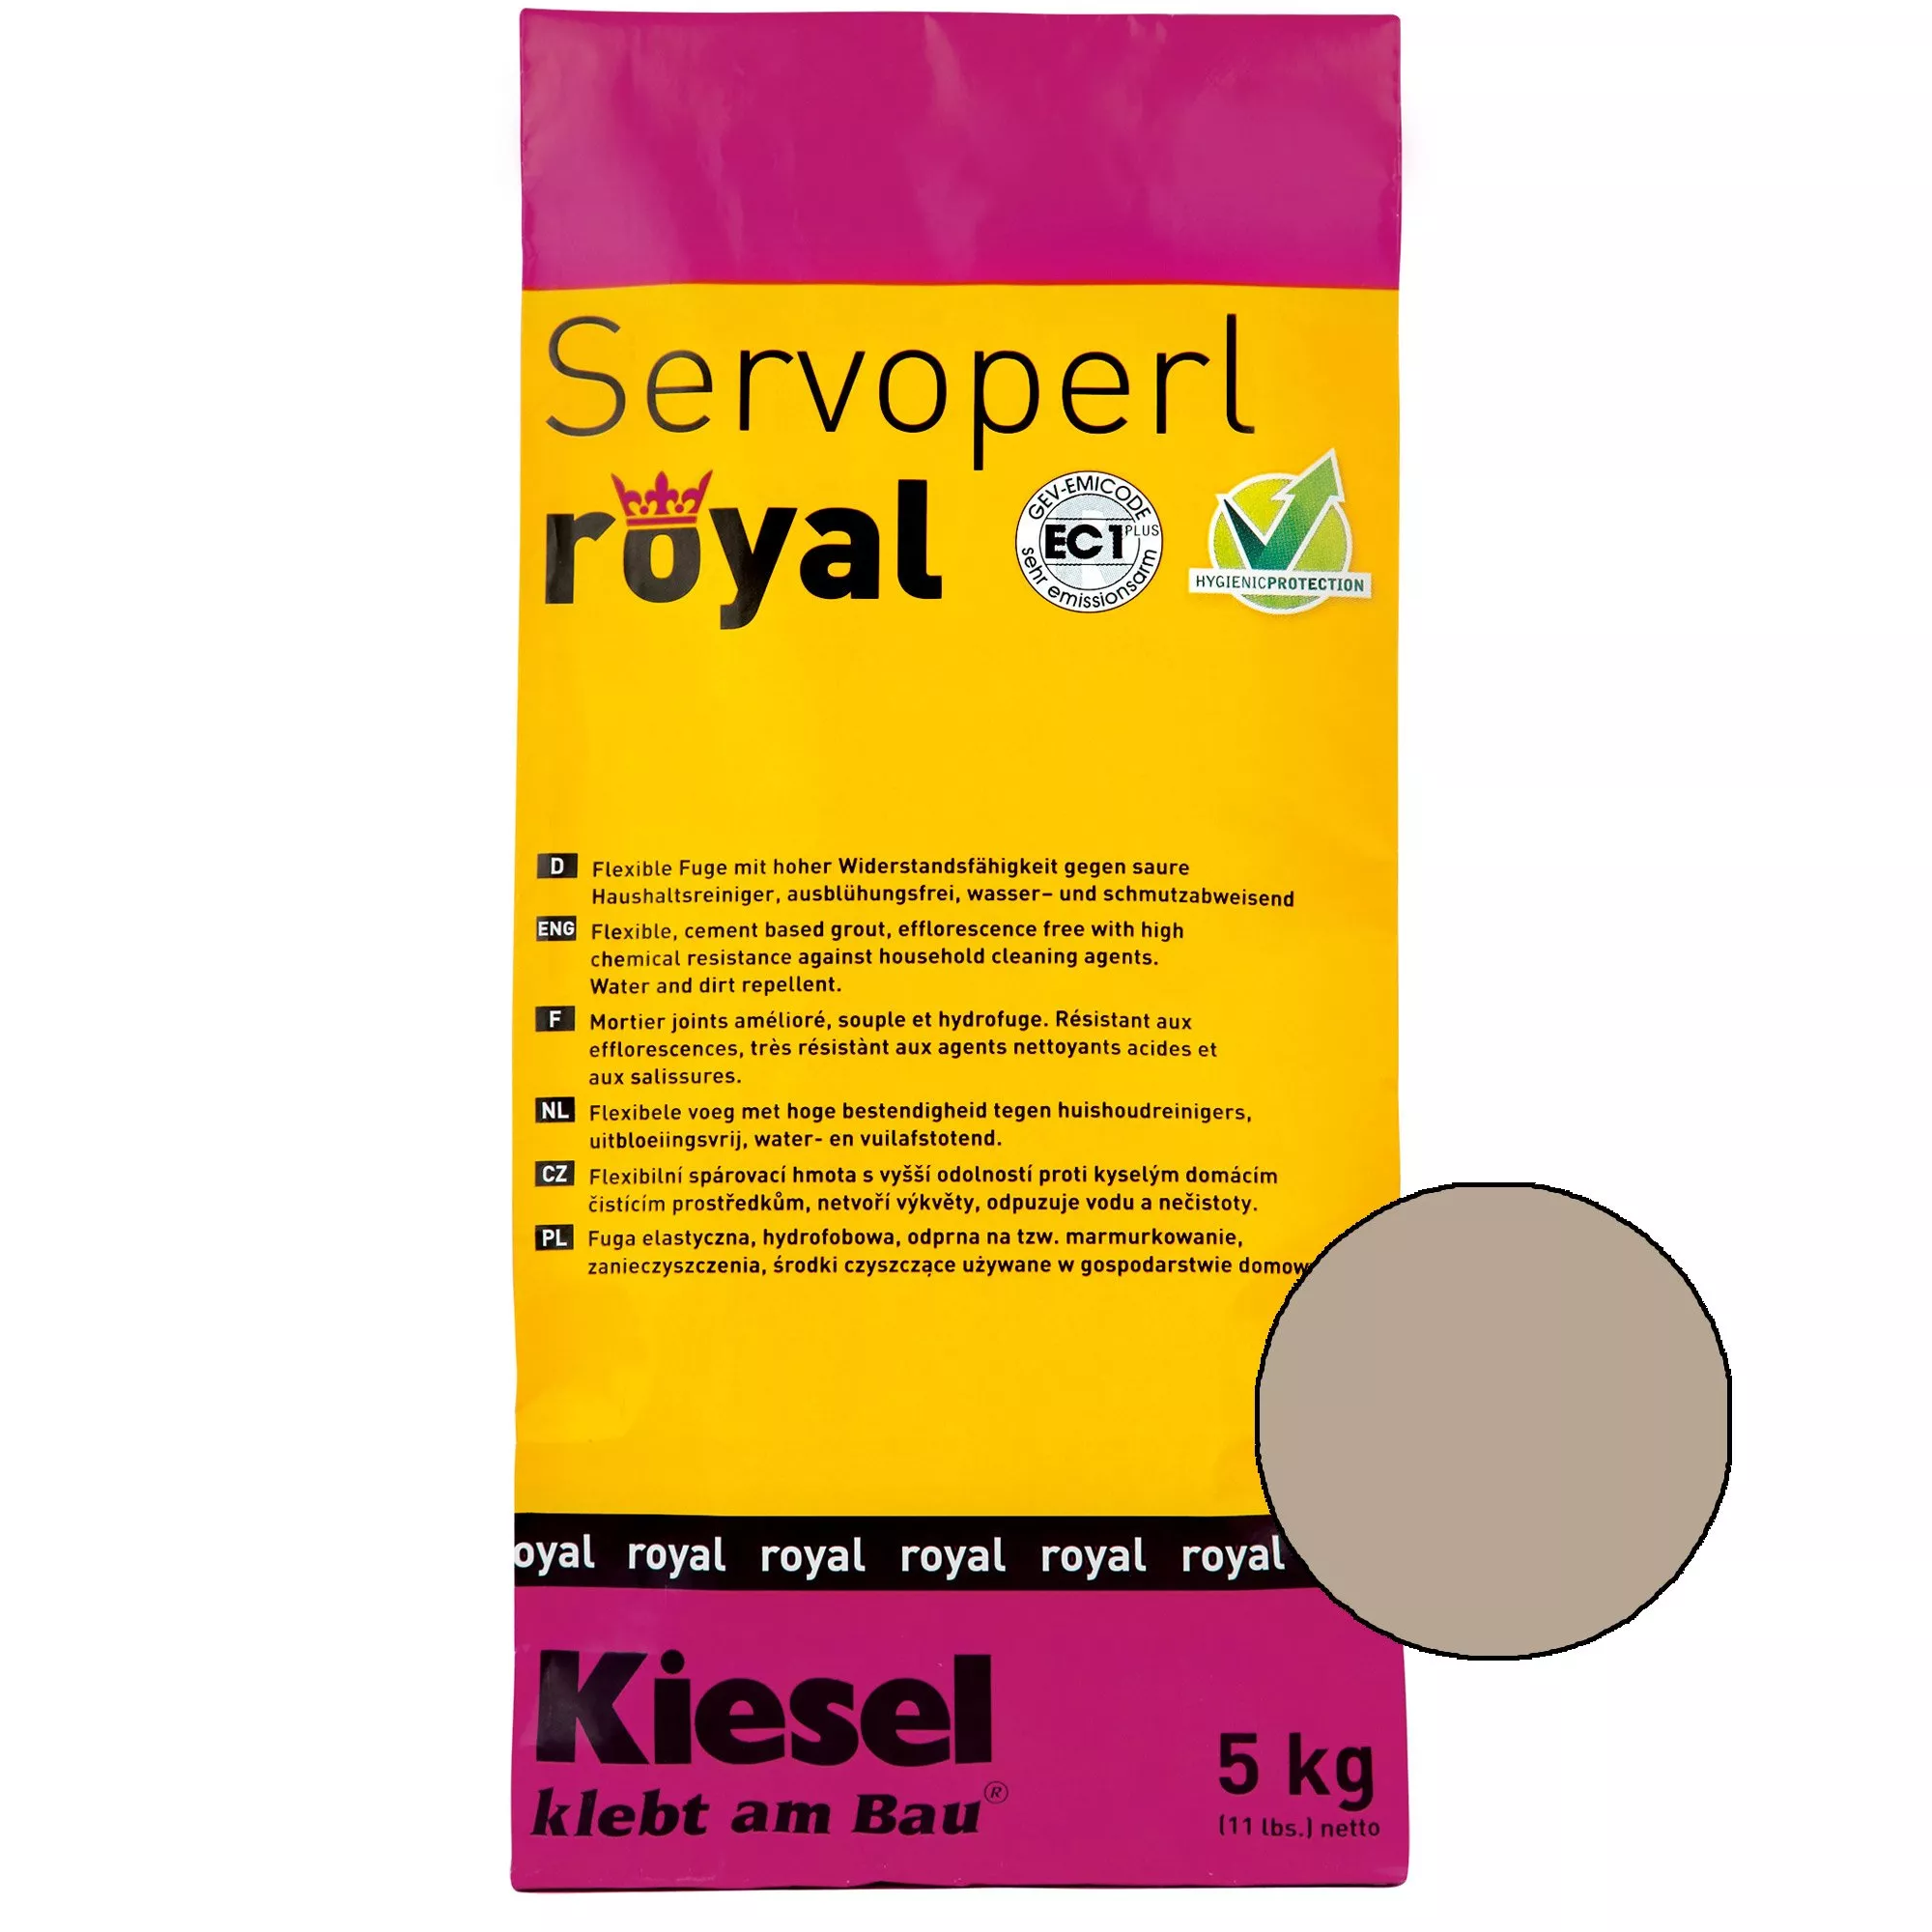 Kiesel Servoperl royal - fugemasse -5 kg Mochacino